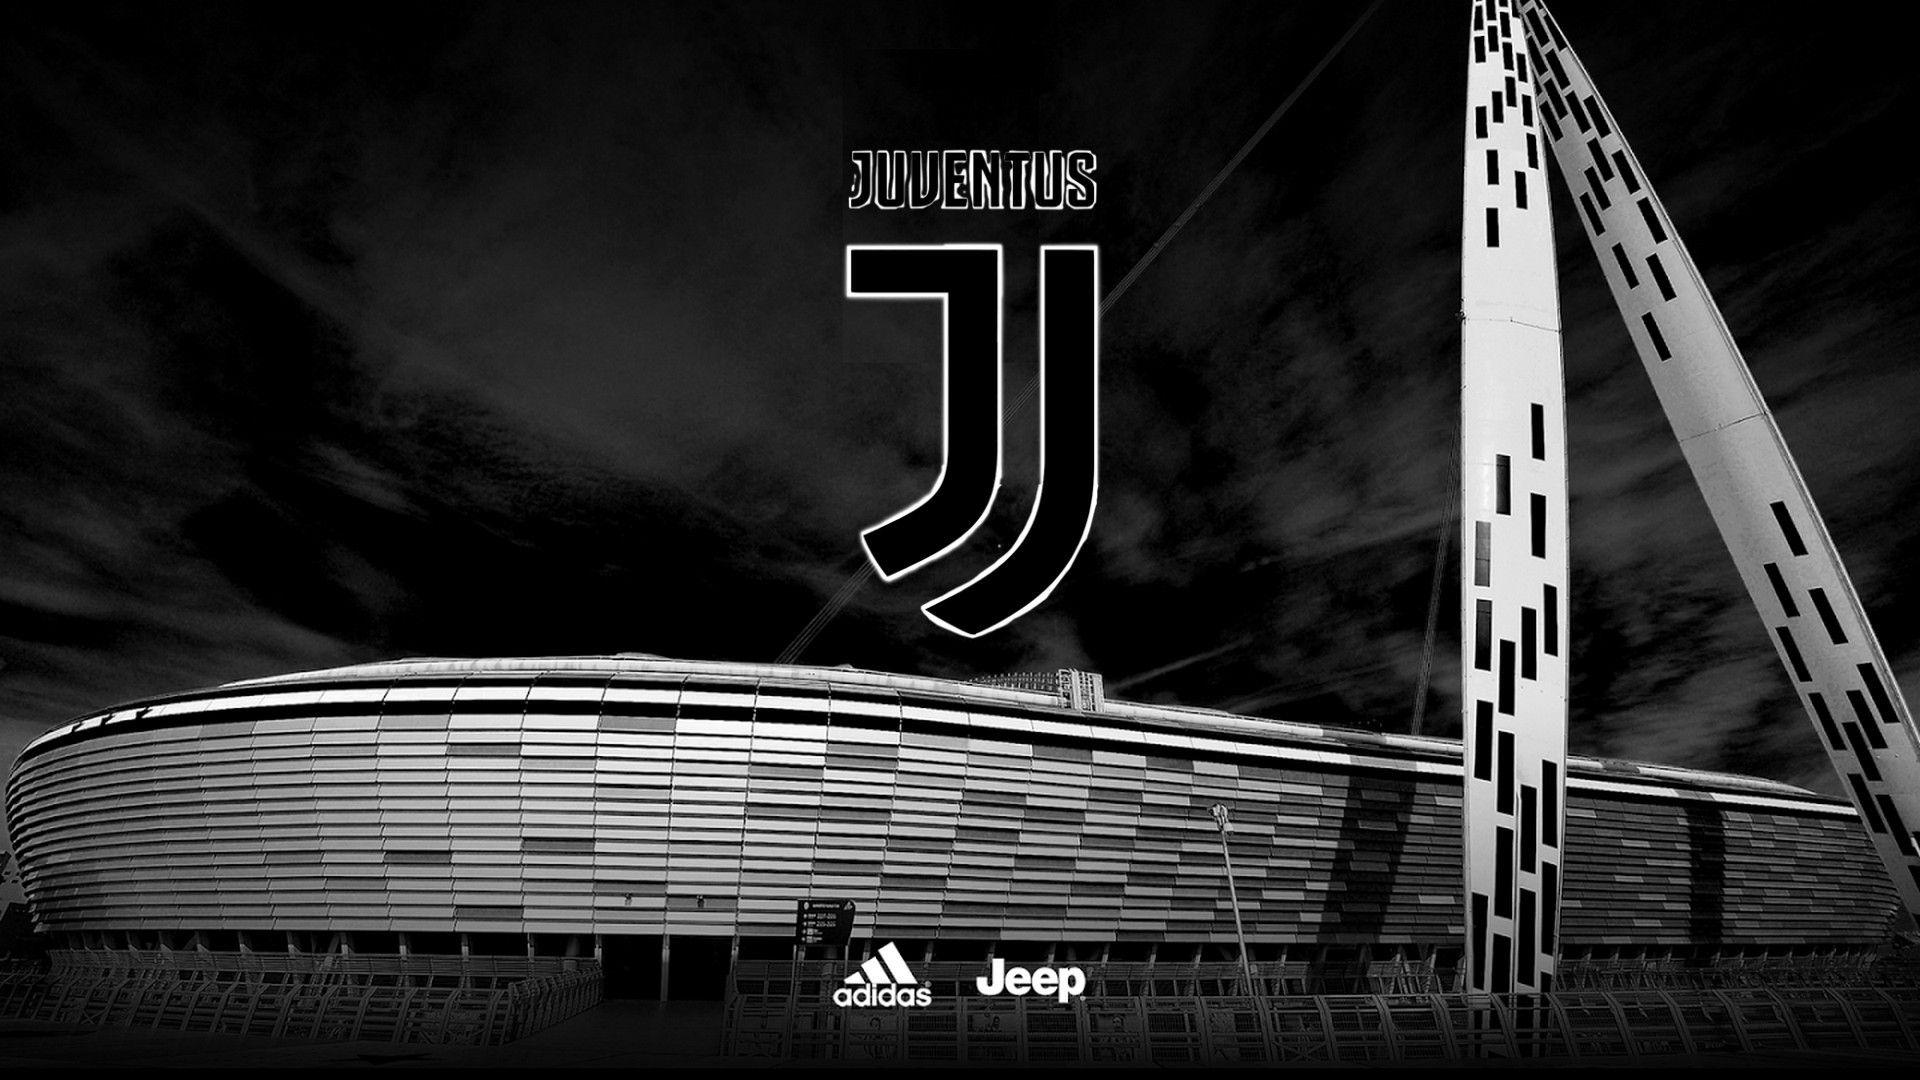 35 Gambar Wallpaper Laptop Juventus Hd terbaru 2020